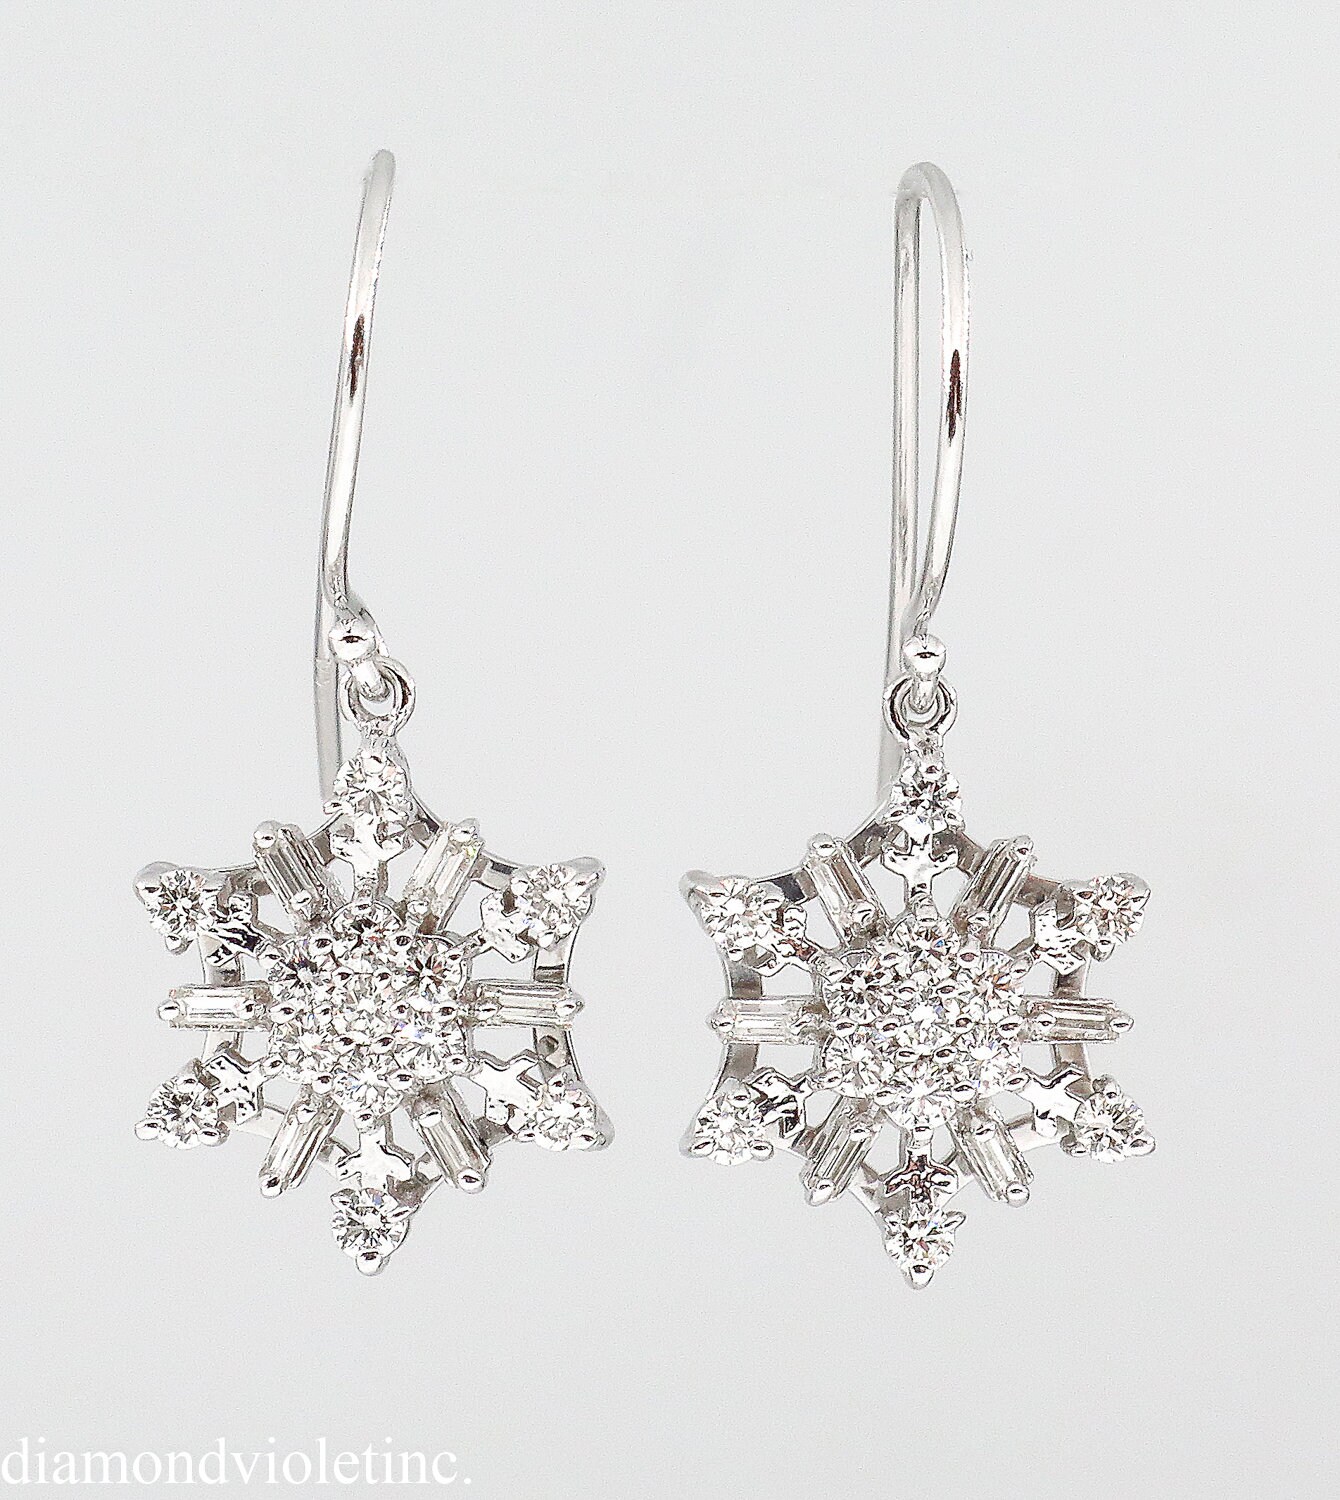 14k White Gold Snowflake Dangle Earrings